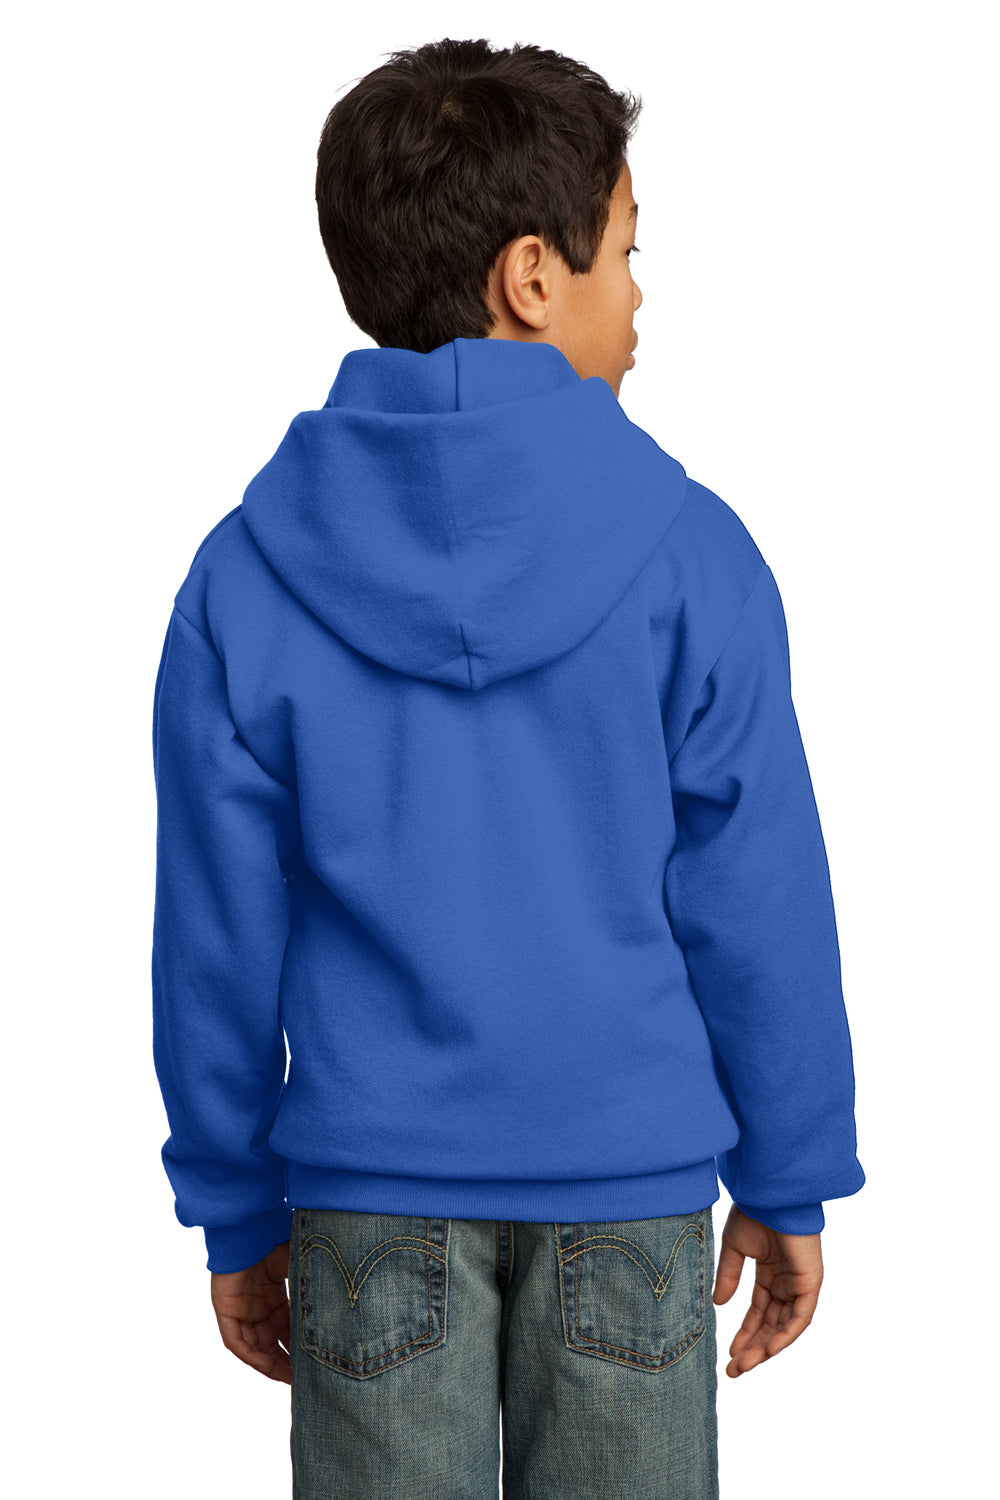 Port & Company PC90YH Youth Core Fleece Hooded Sweatshirt Hoodie Royal Blue Back